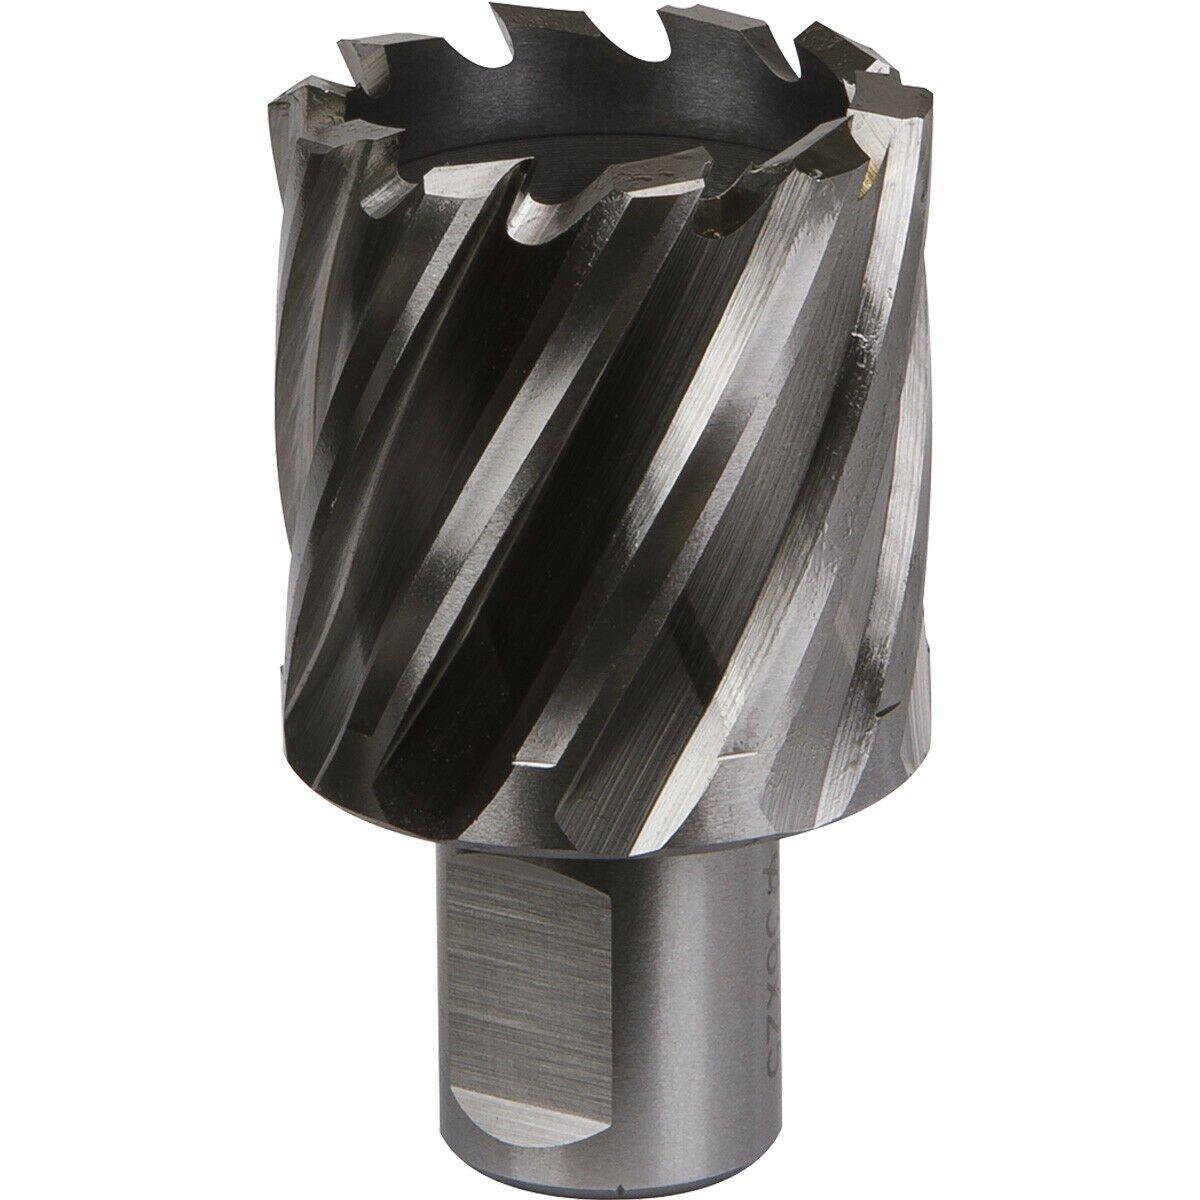 36mm x 25mm Depth Rotabor Cutter - M2 Steel Annular Metal Core Drill 19mm Shank